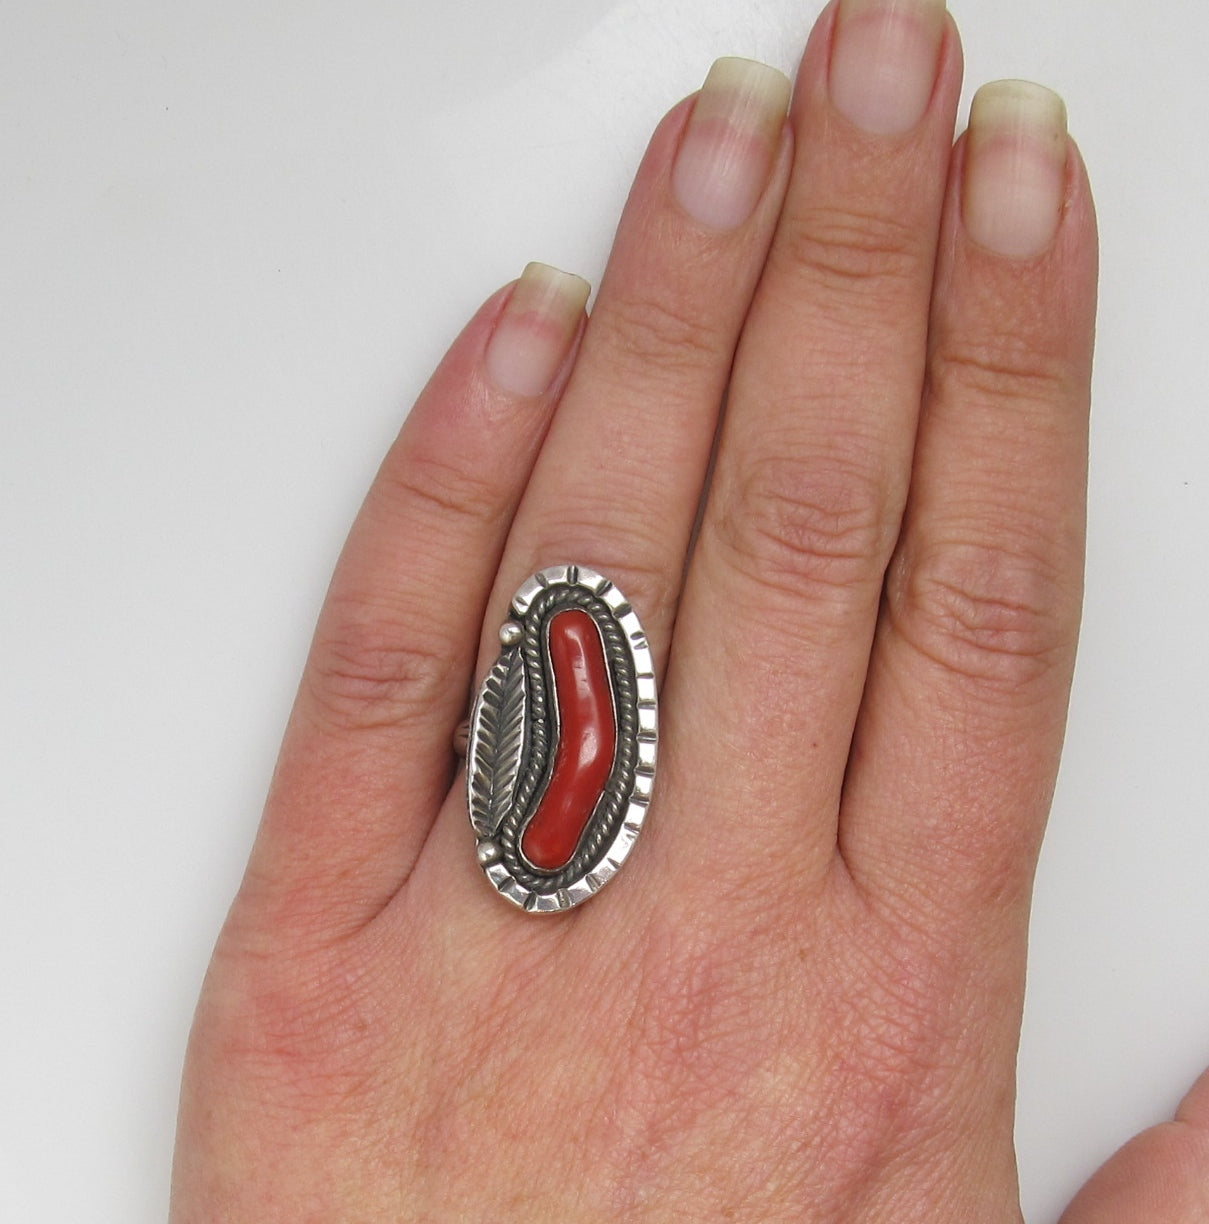 Vintage Navajo sterling silver coral ring